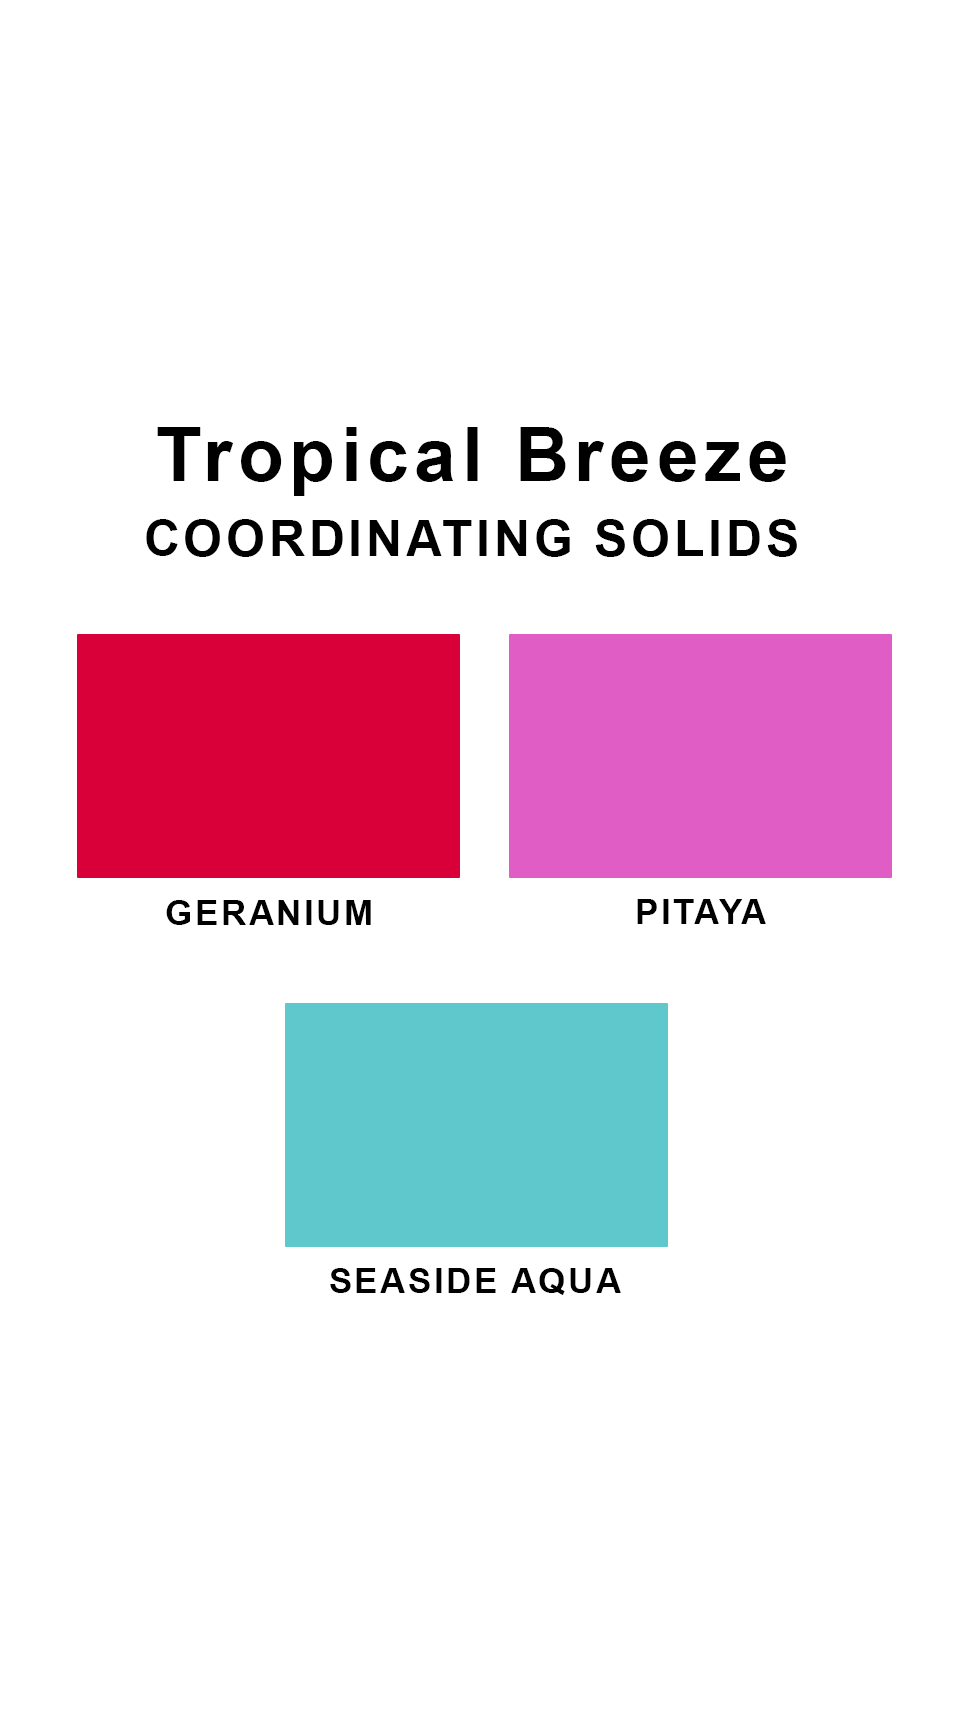 Coordinating solids chart for Sunsets Tropical Breeze swimsuit print: Geranium, Pitaya, and Seaside Aqua